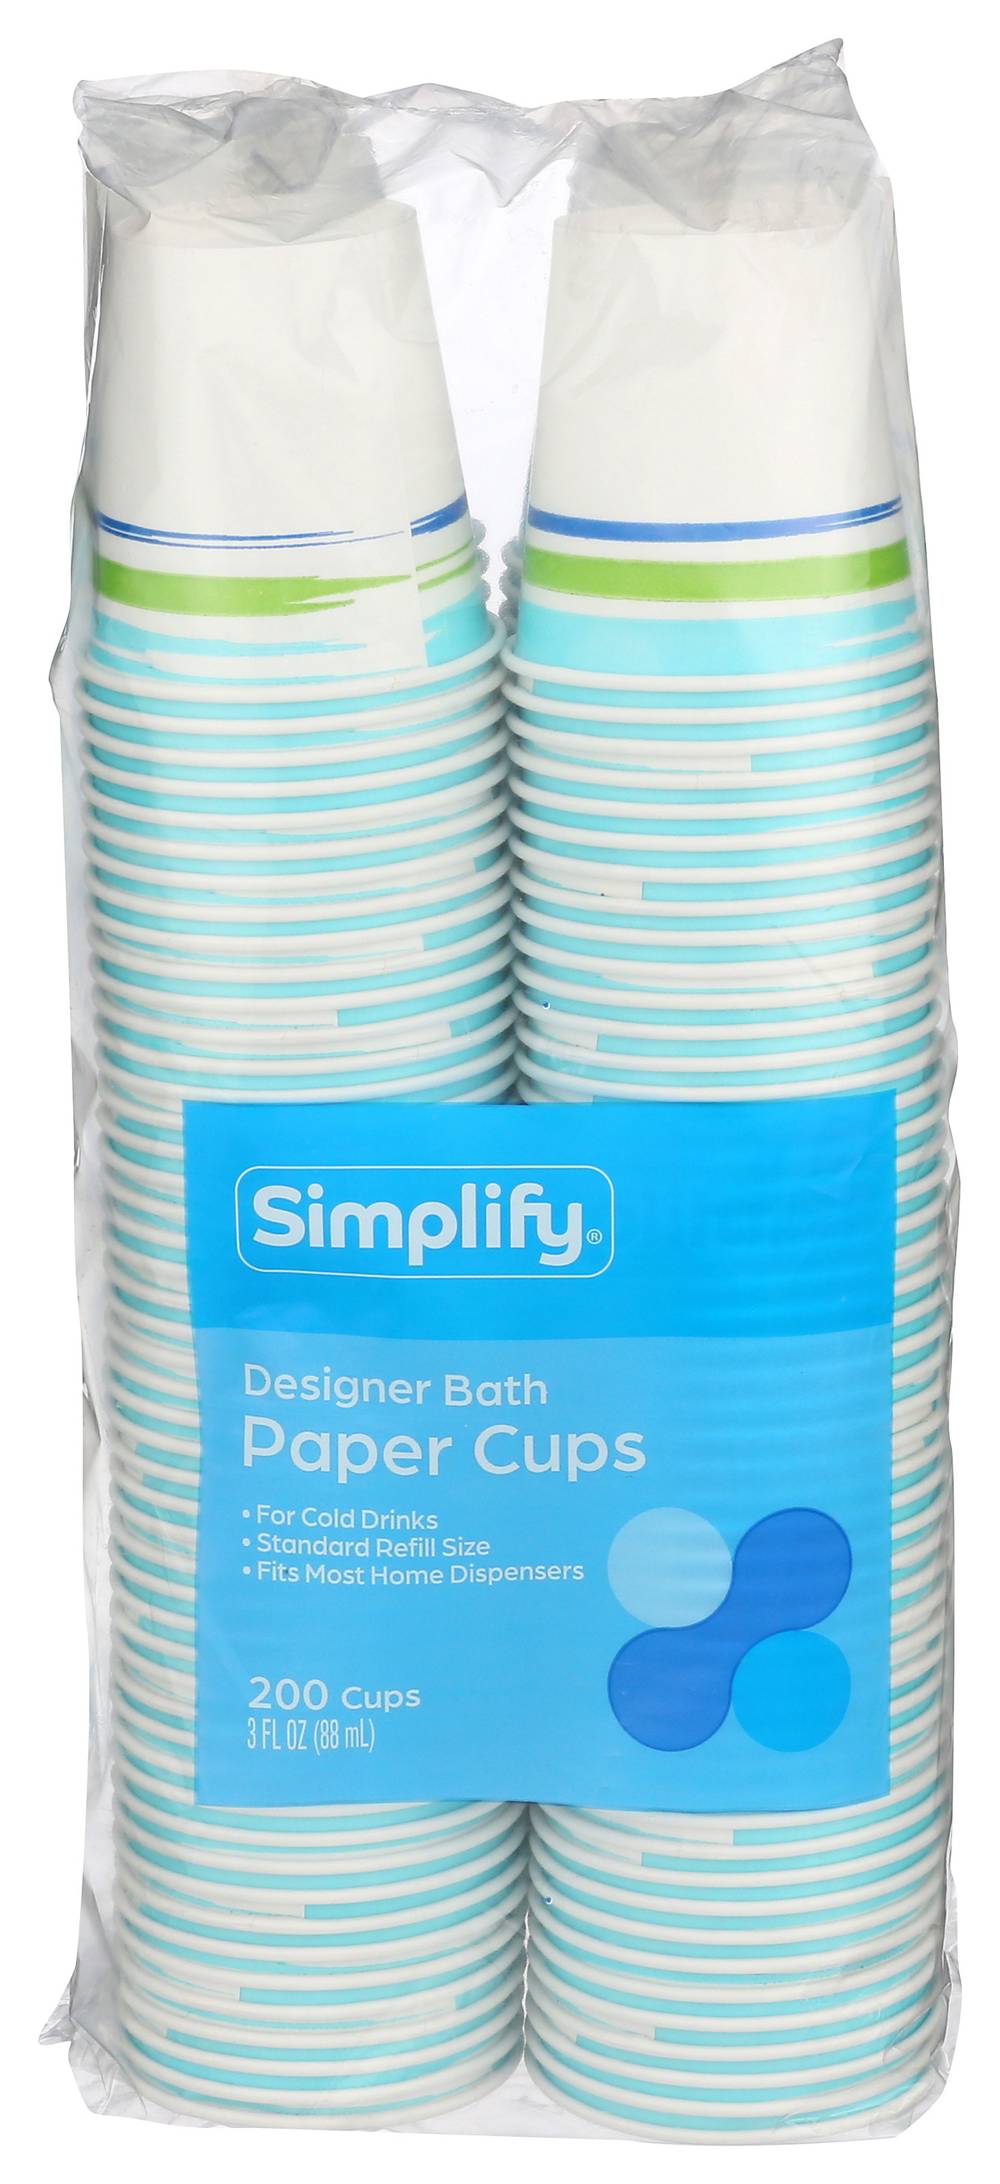 Simplify Designer Bath Paper Cups